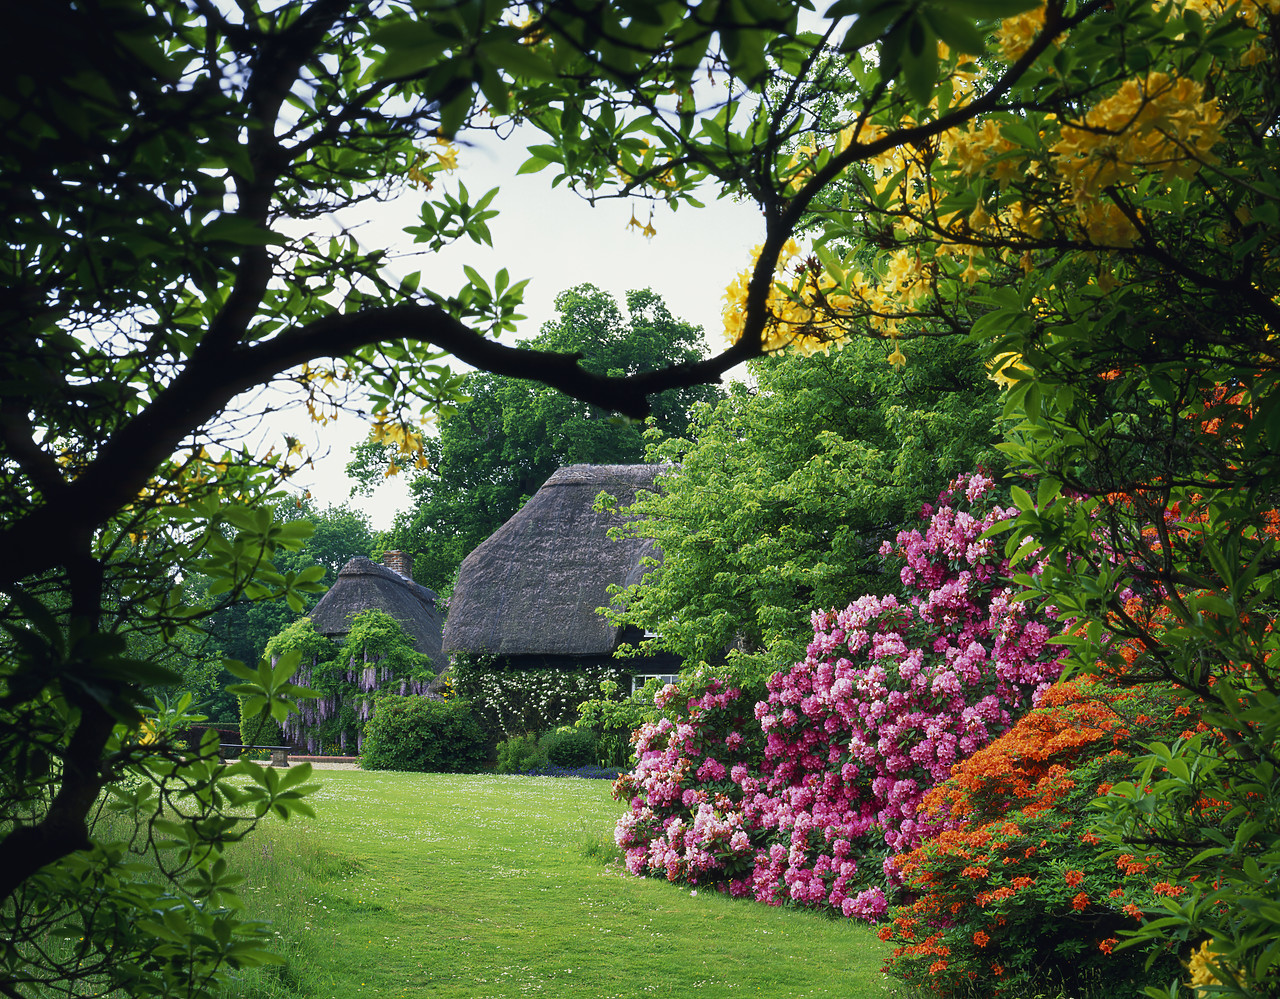 #980697-1 - Garden in Spring, Minstead, Hampshire, England